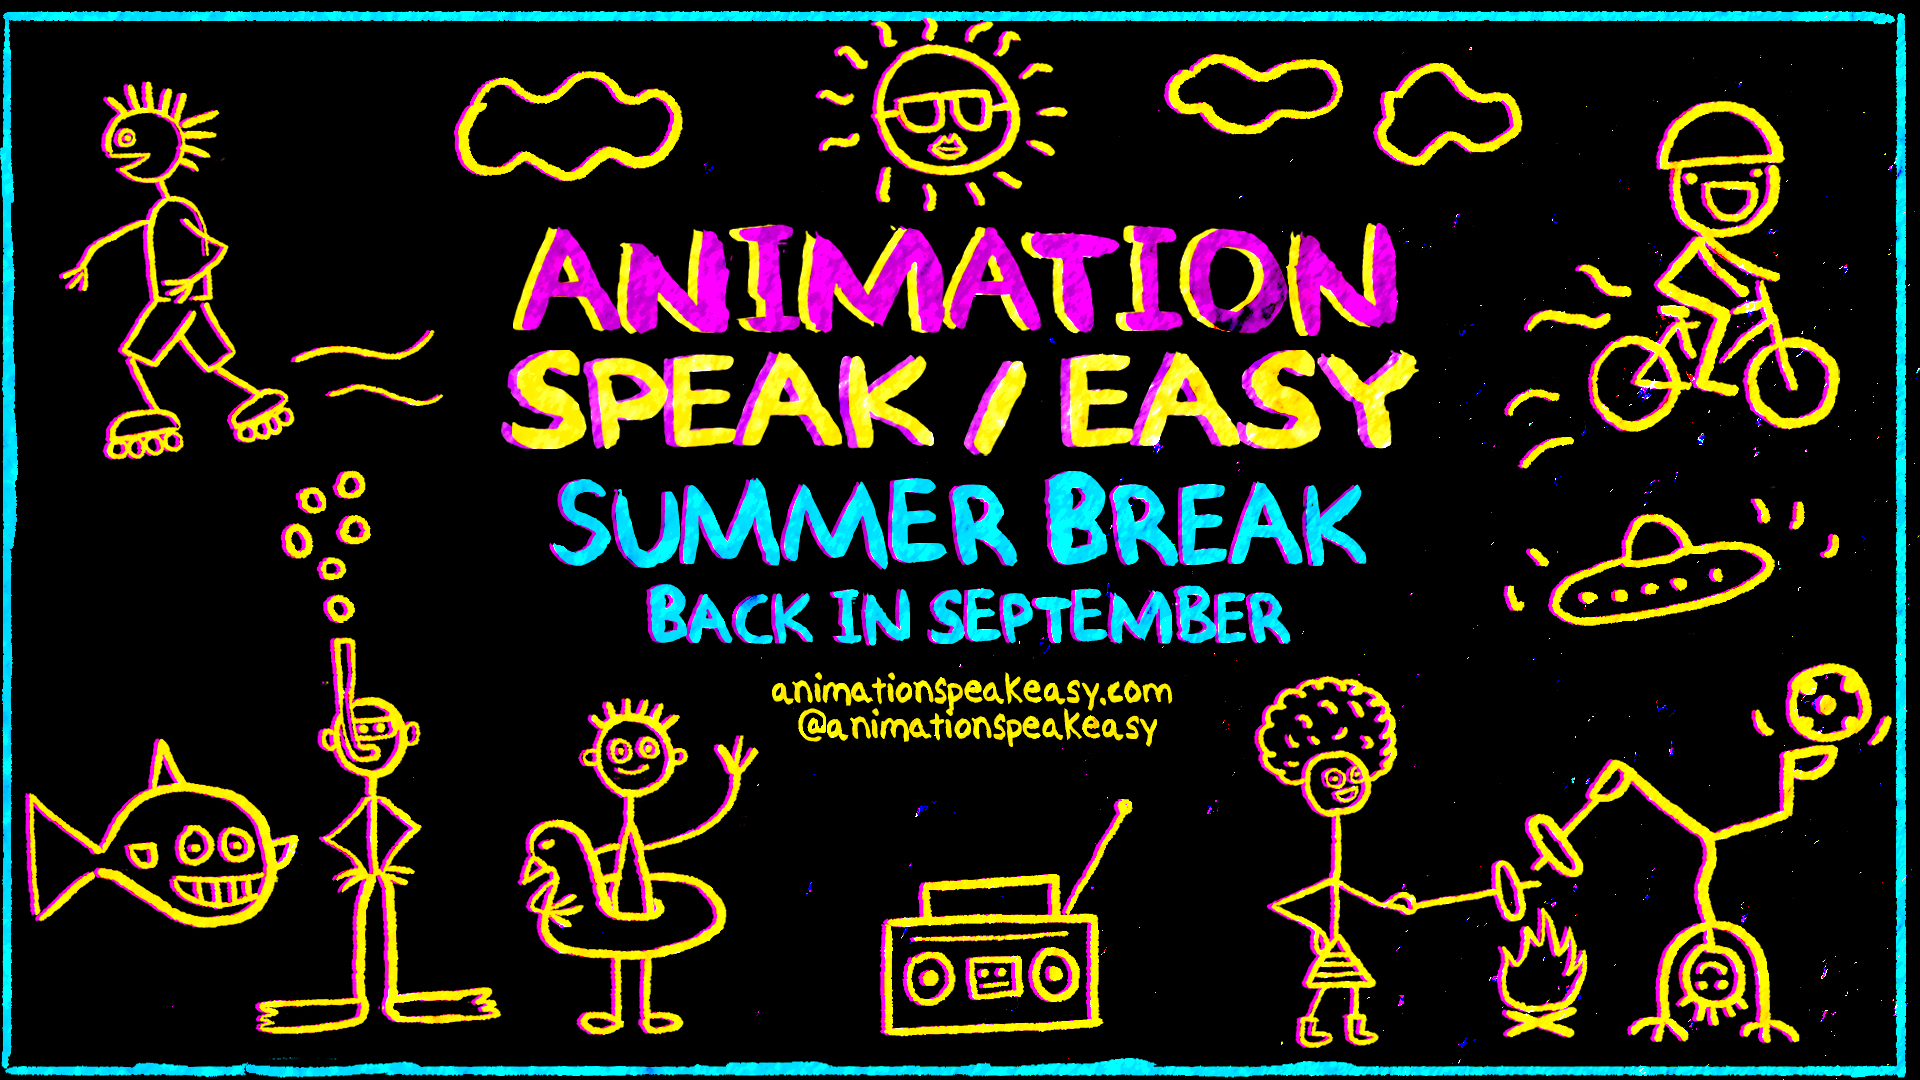 Animation Speak/Easy Summerbreak